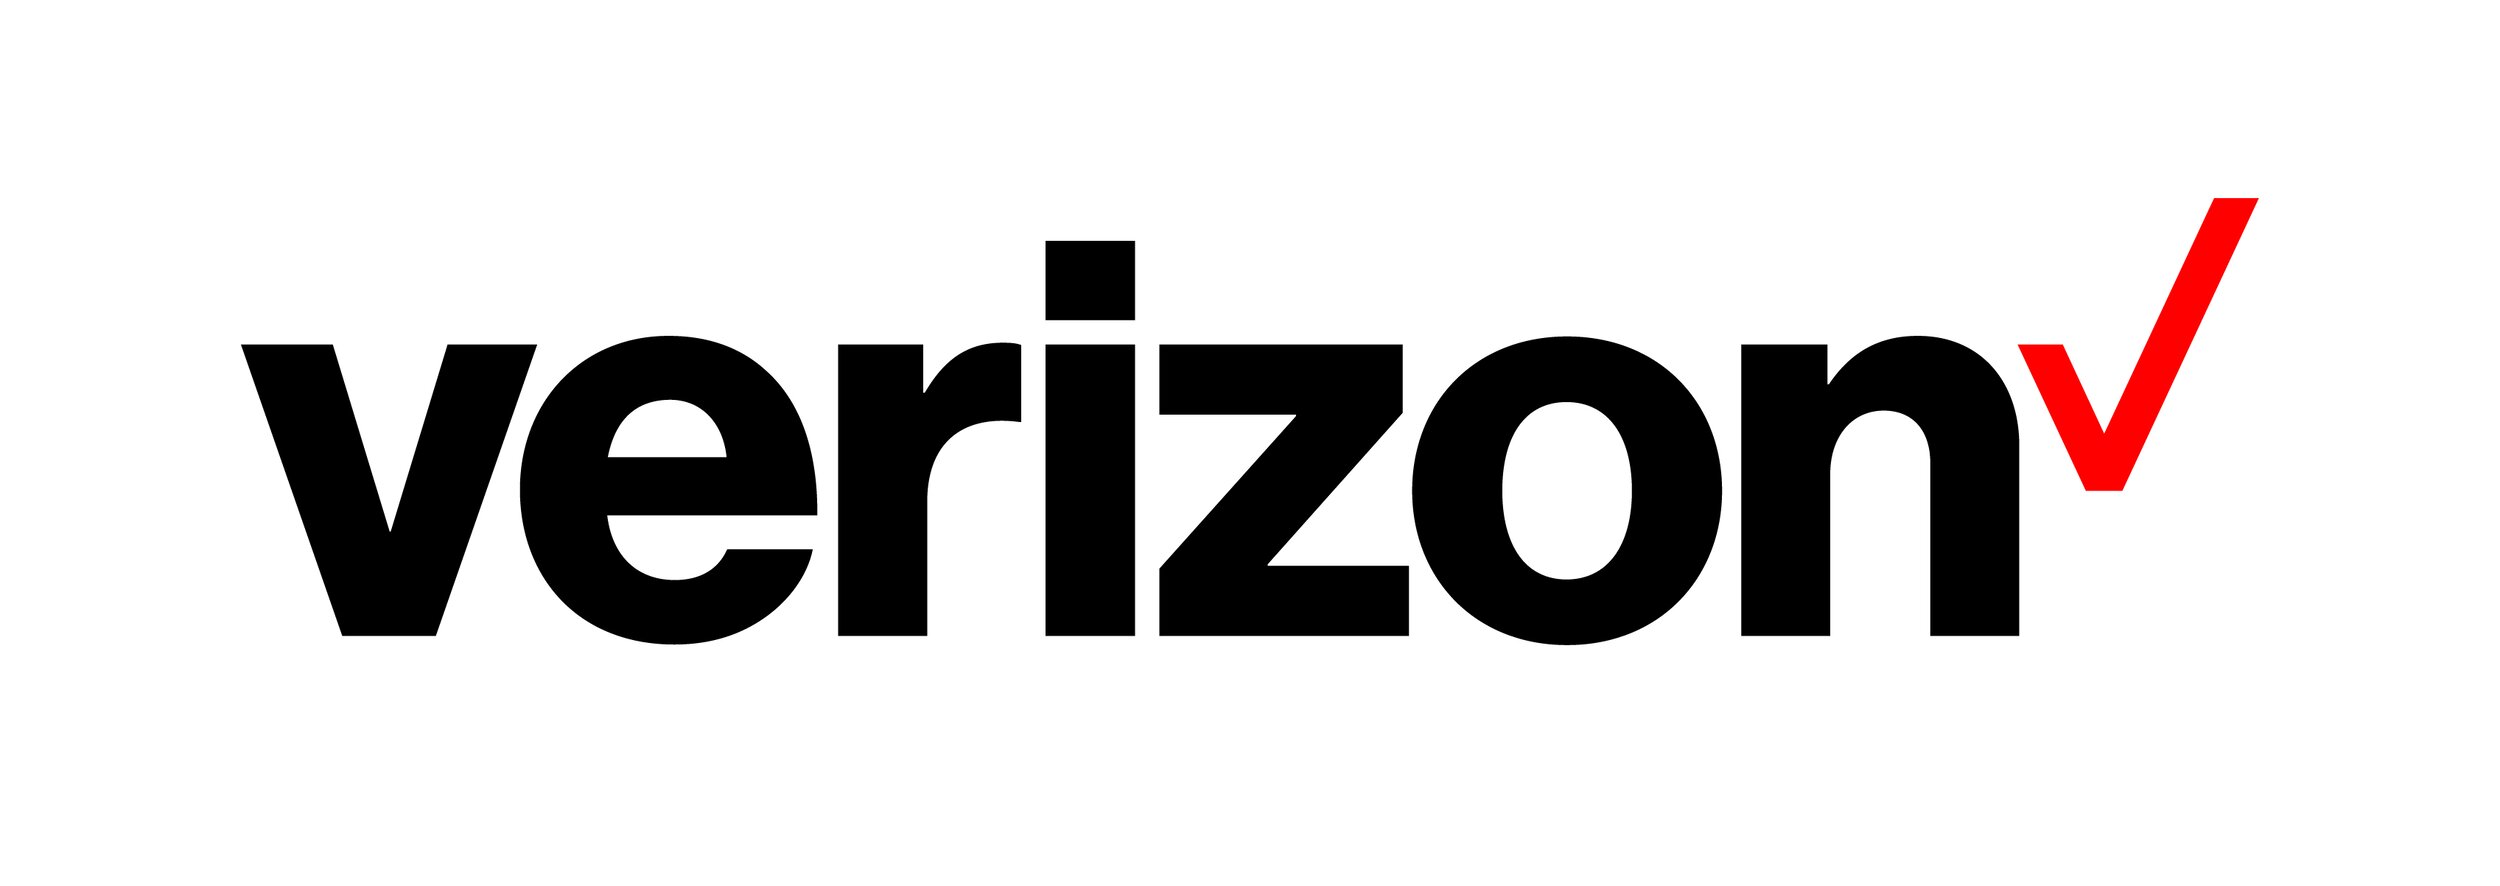 Verizon Logo.JPG